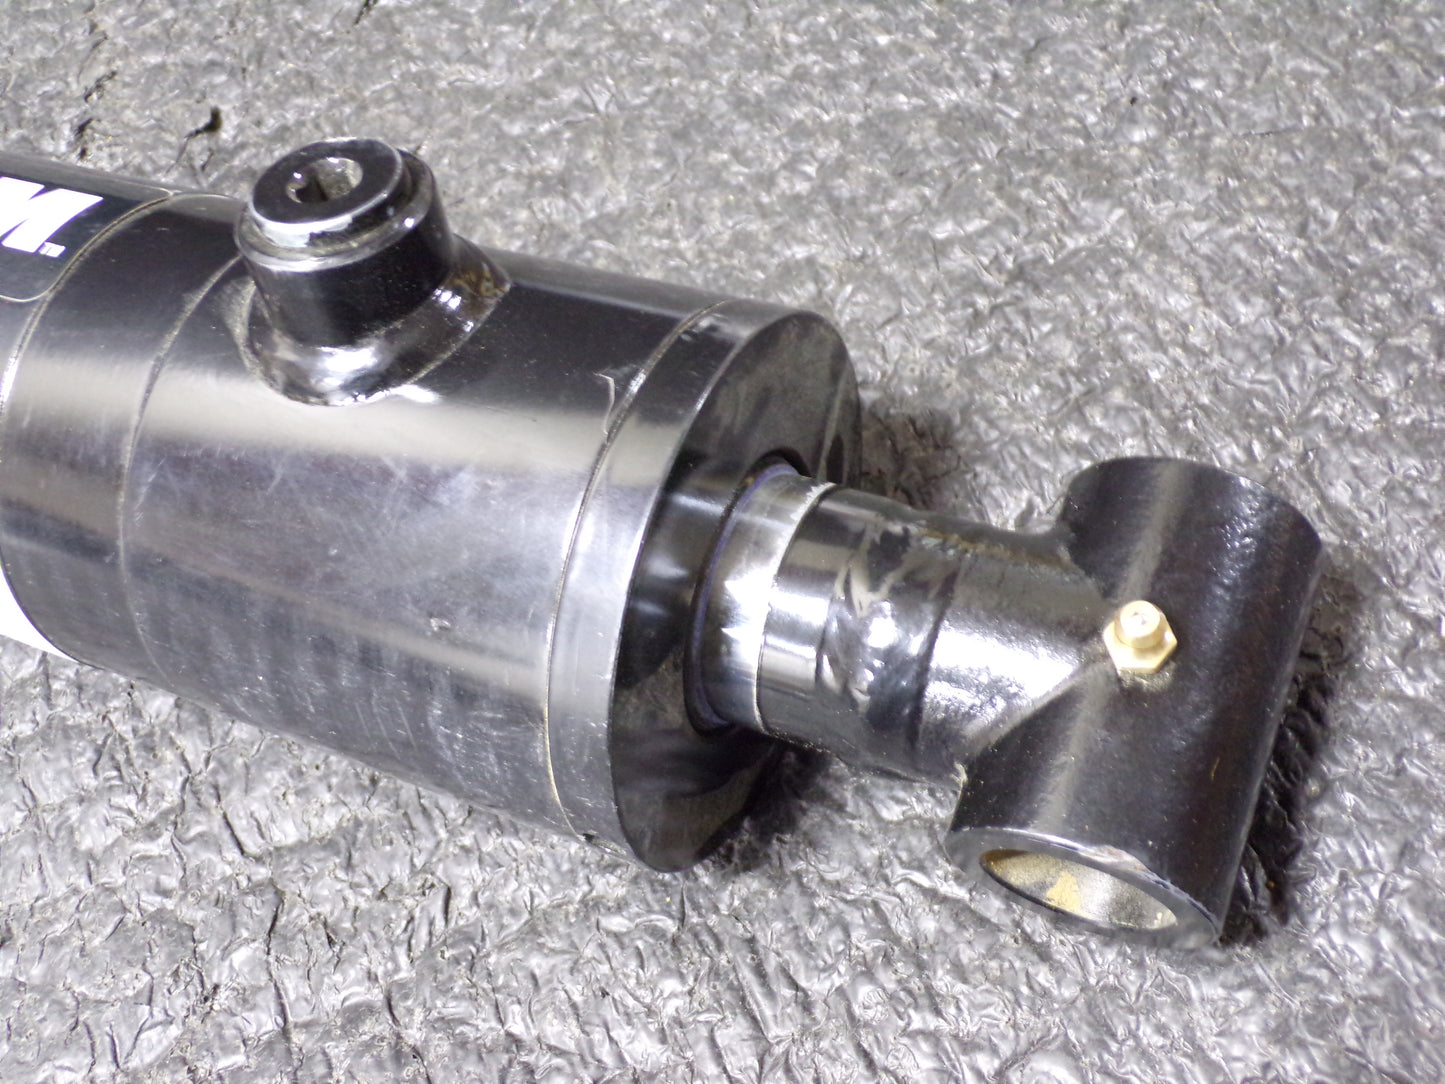 MAXIM 288-342 Welded Hydraulic Cylinder: 24 in Stroke Lg, 32 in Retracted Lg, 18,070 lb, 1 1/2 in Rod Dia. (CR00712-WTA19)